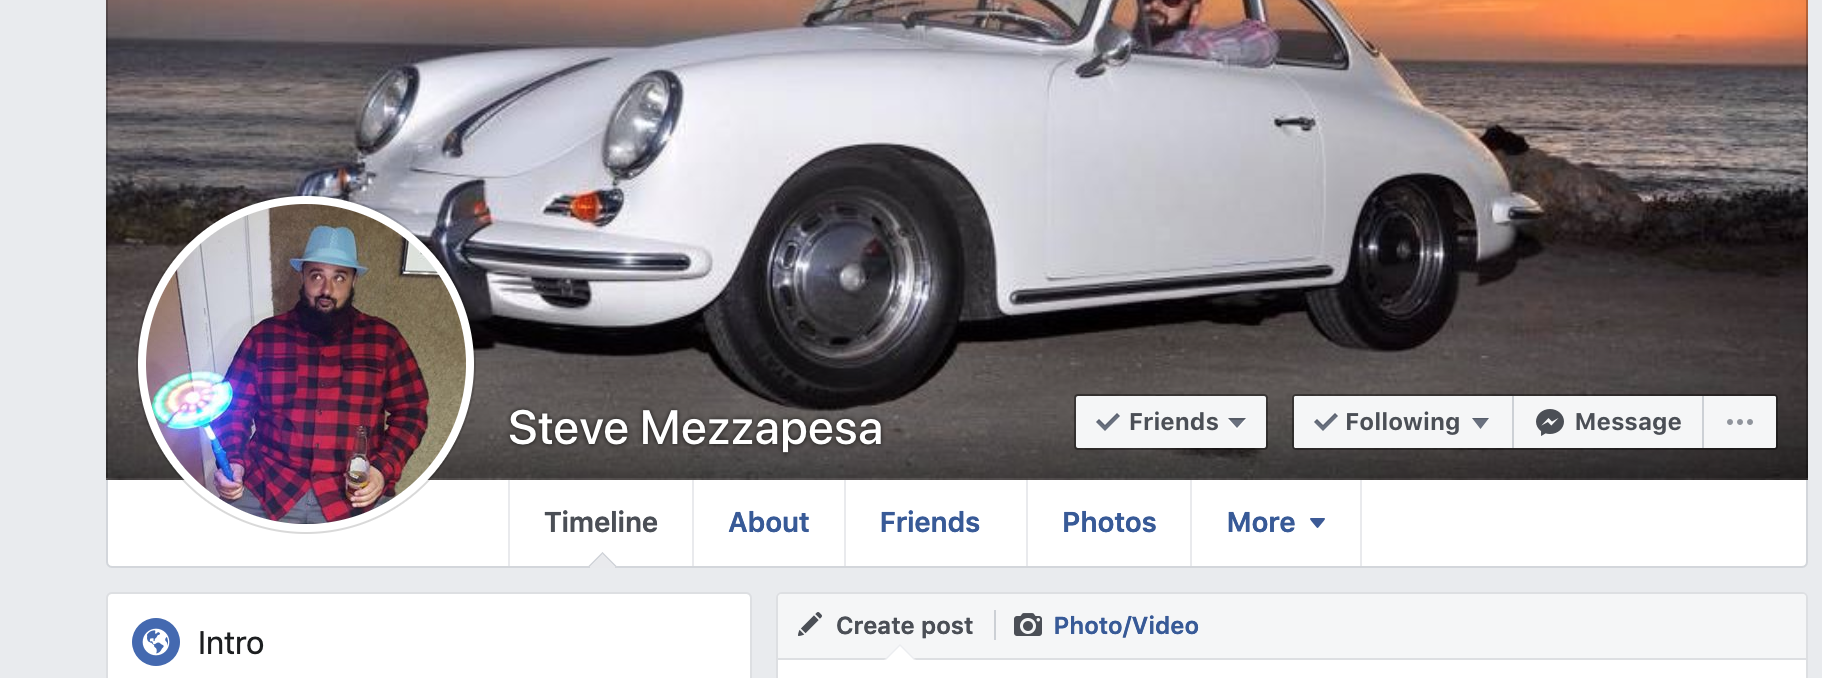 Steve Mezzapesas Facebook